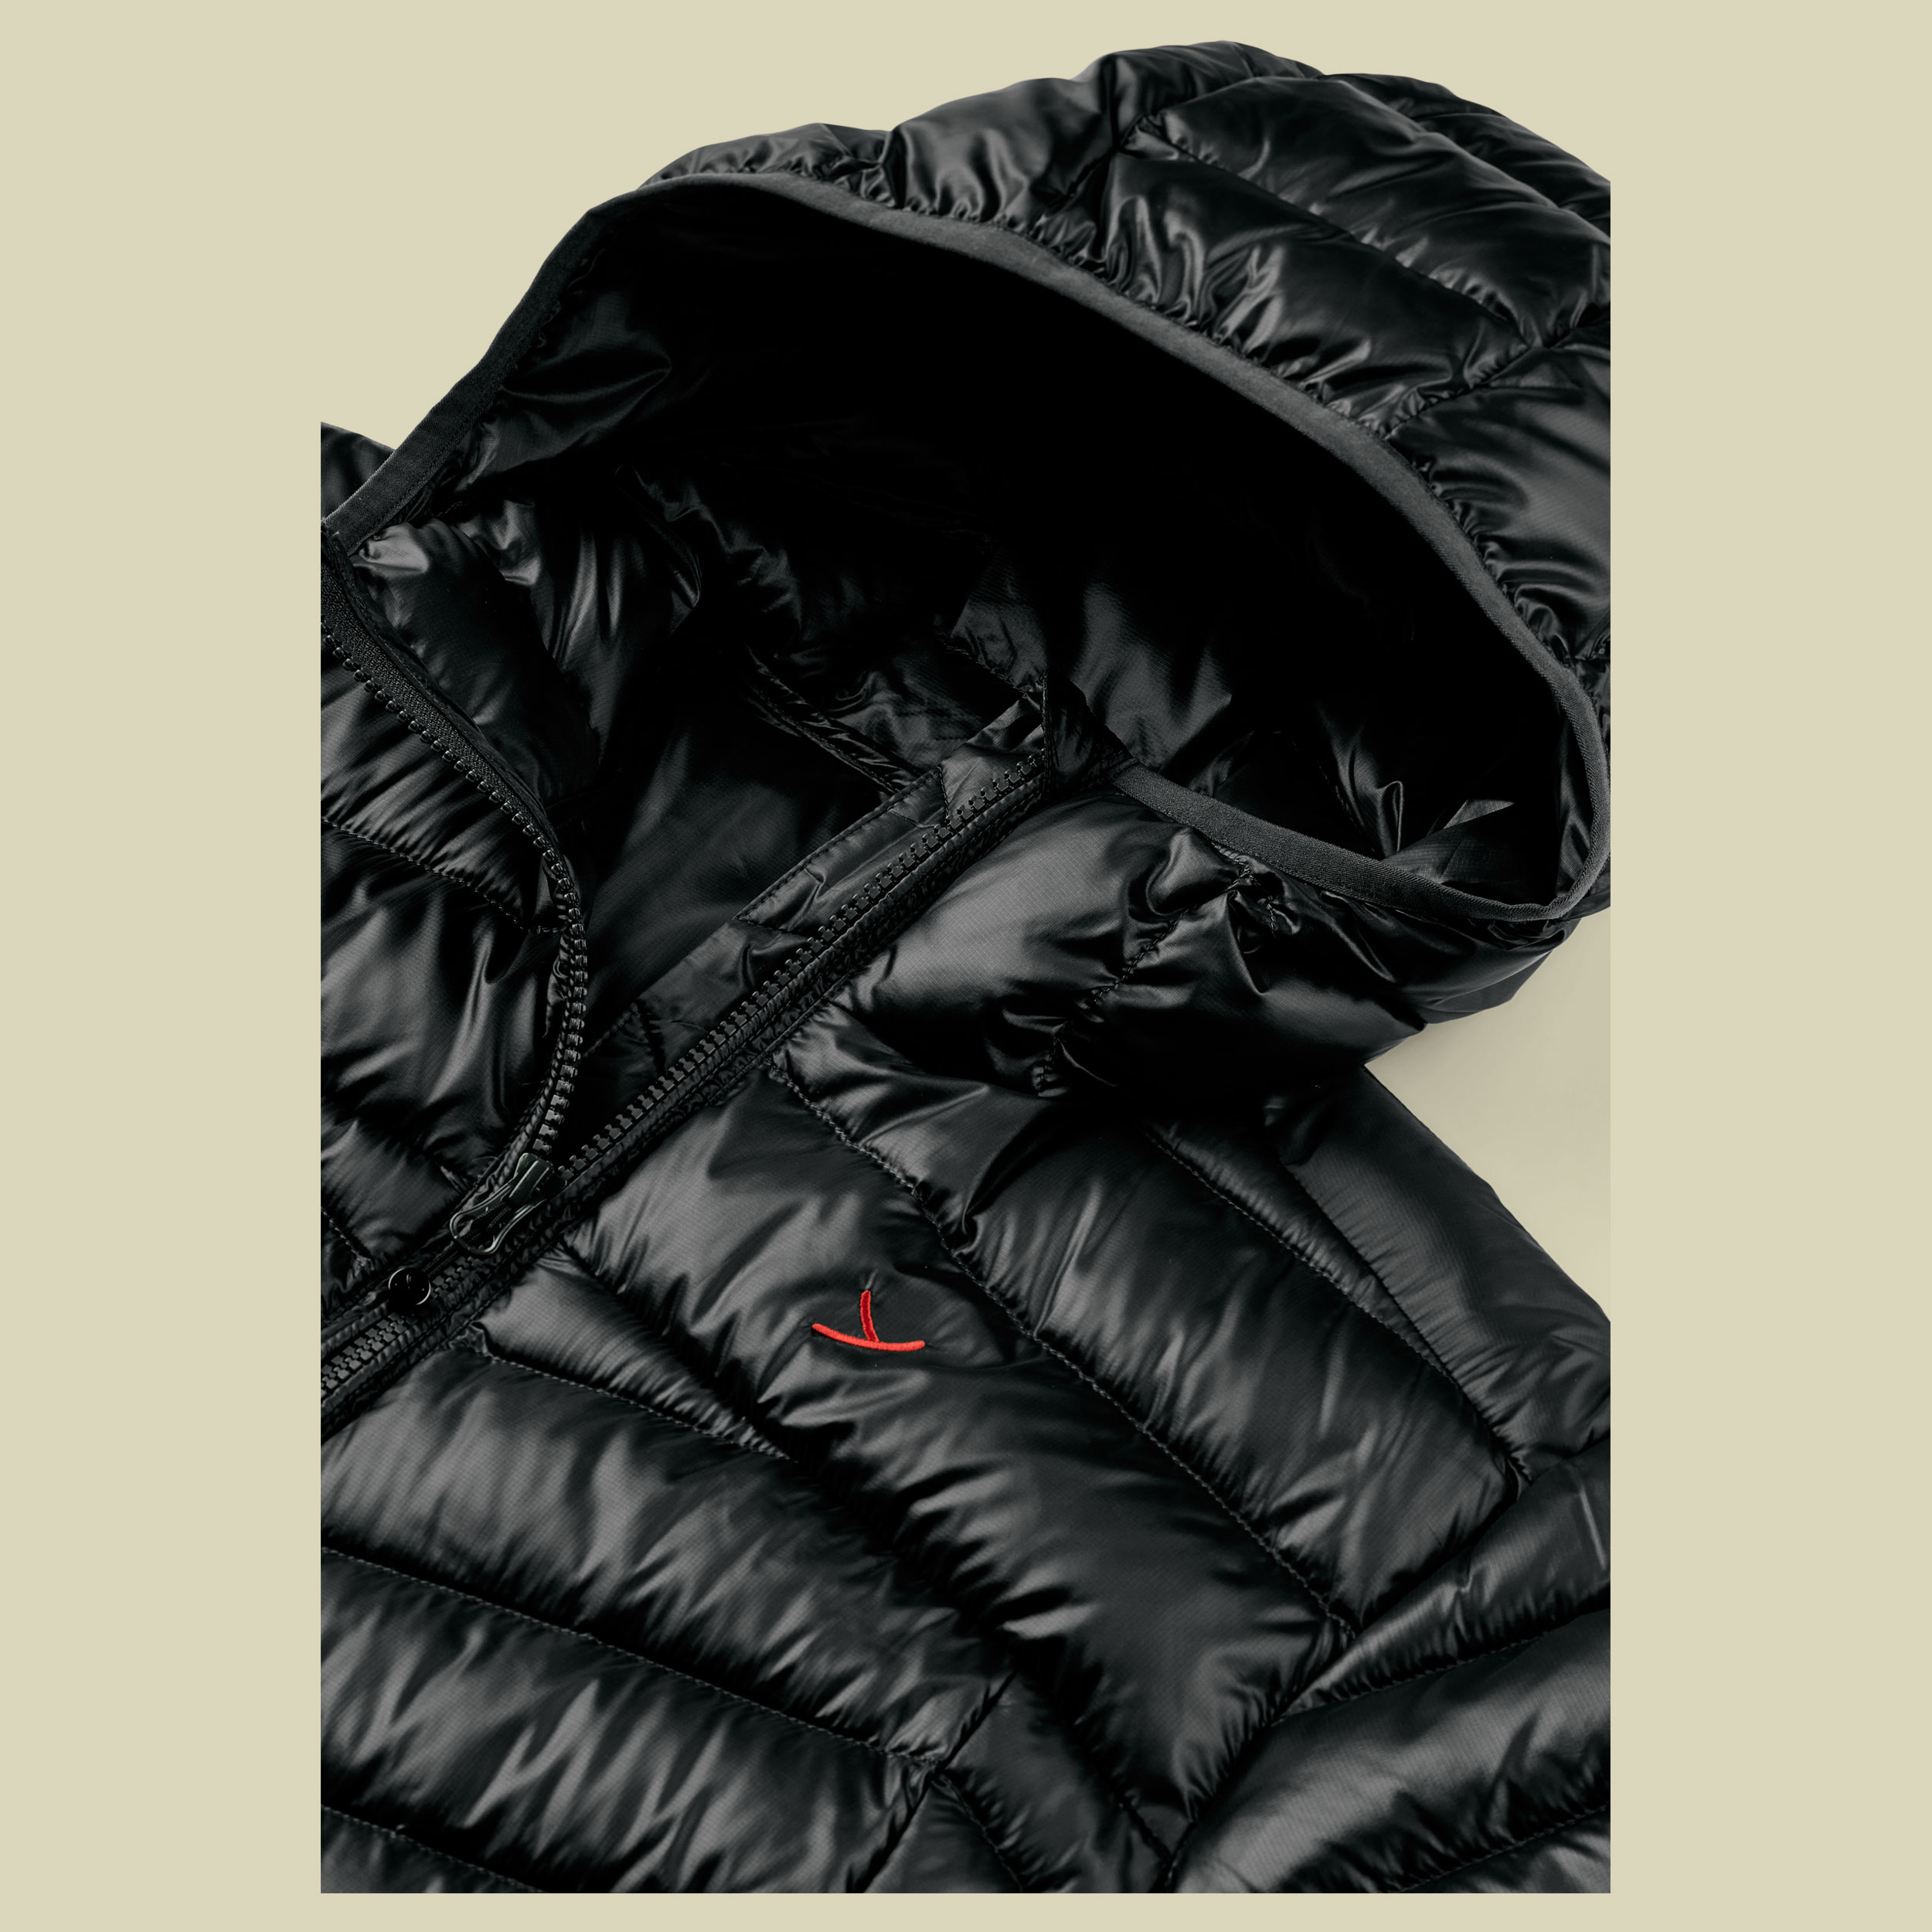 Payne M’s Hooded Down Jacket Größe XL Farbe black